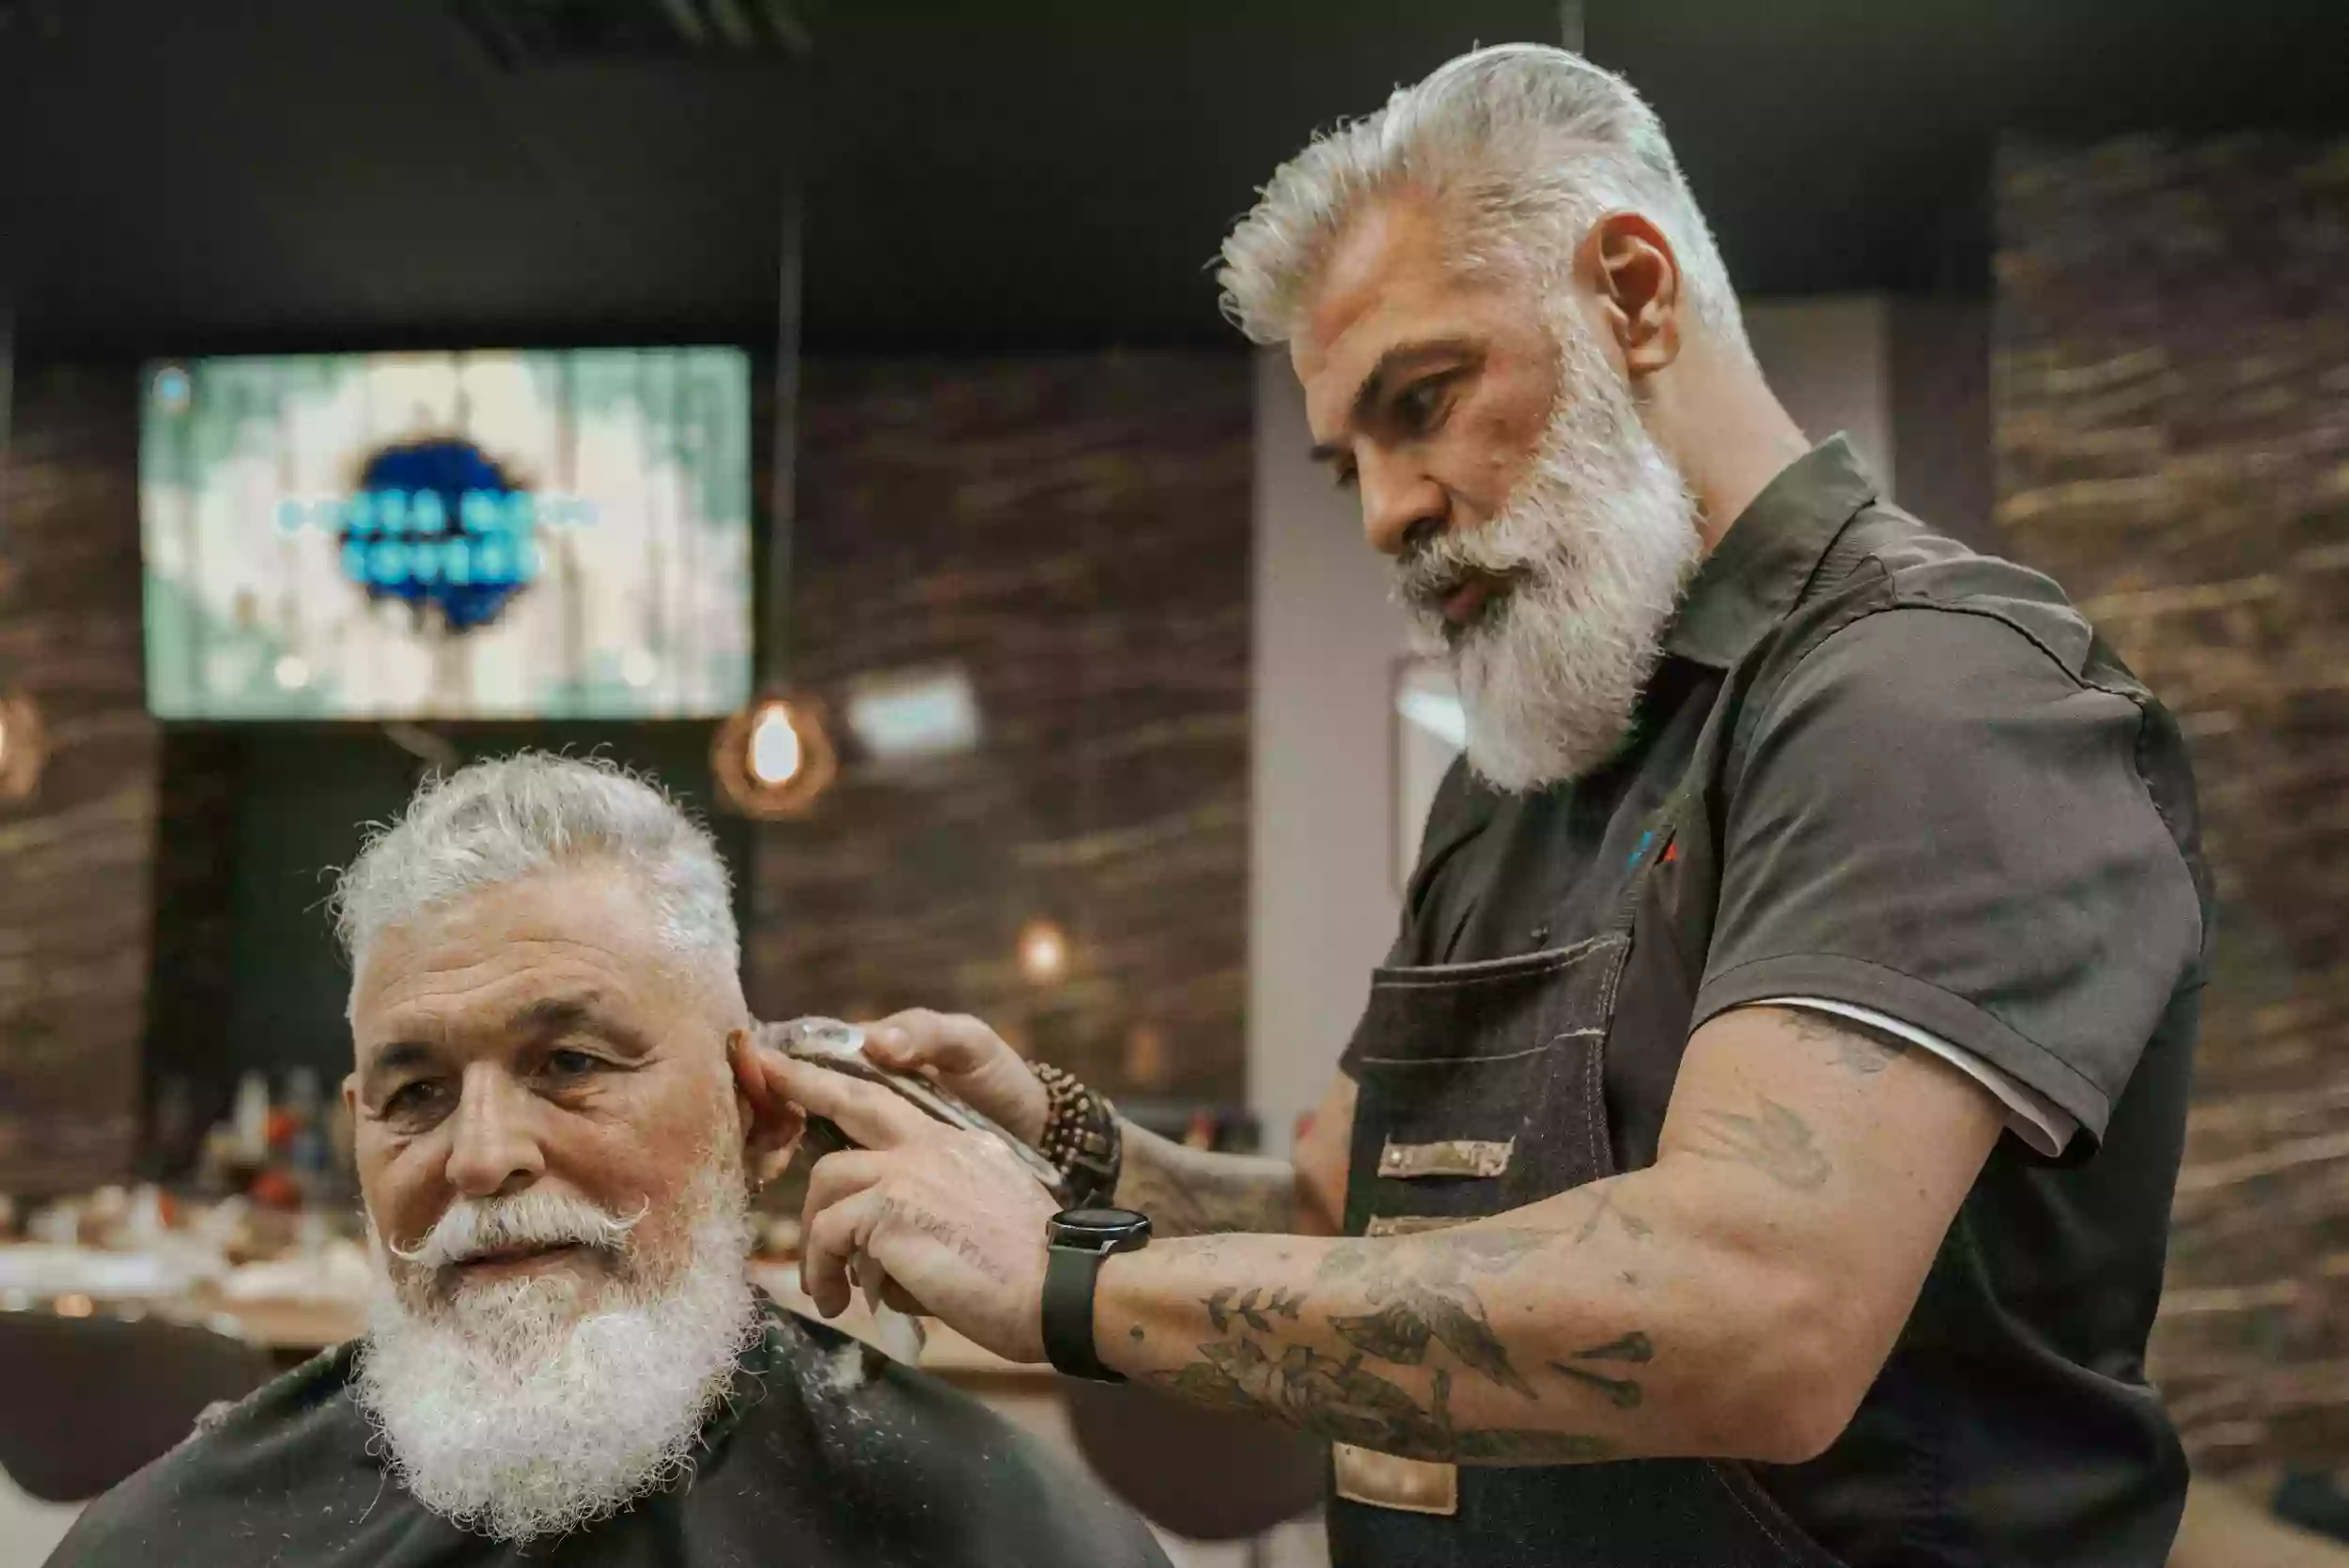 The Hub Barber & Business